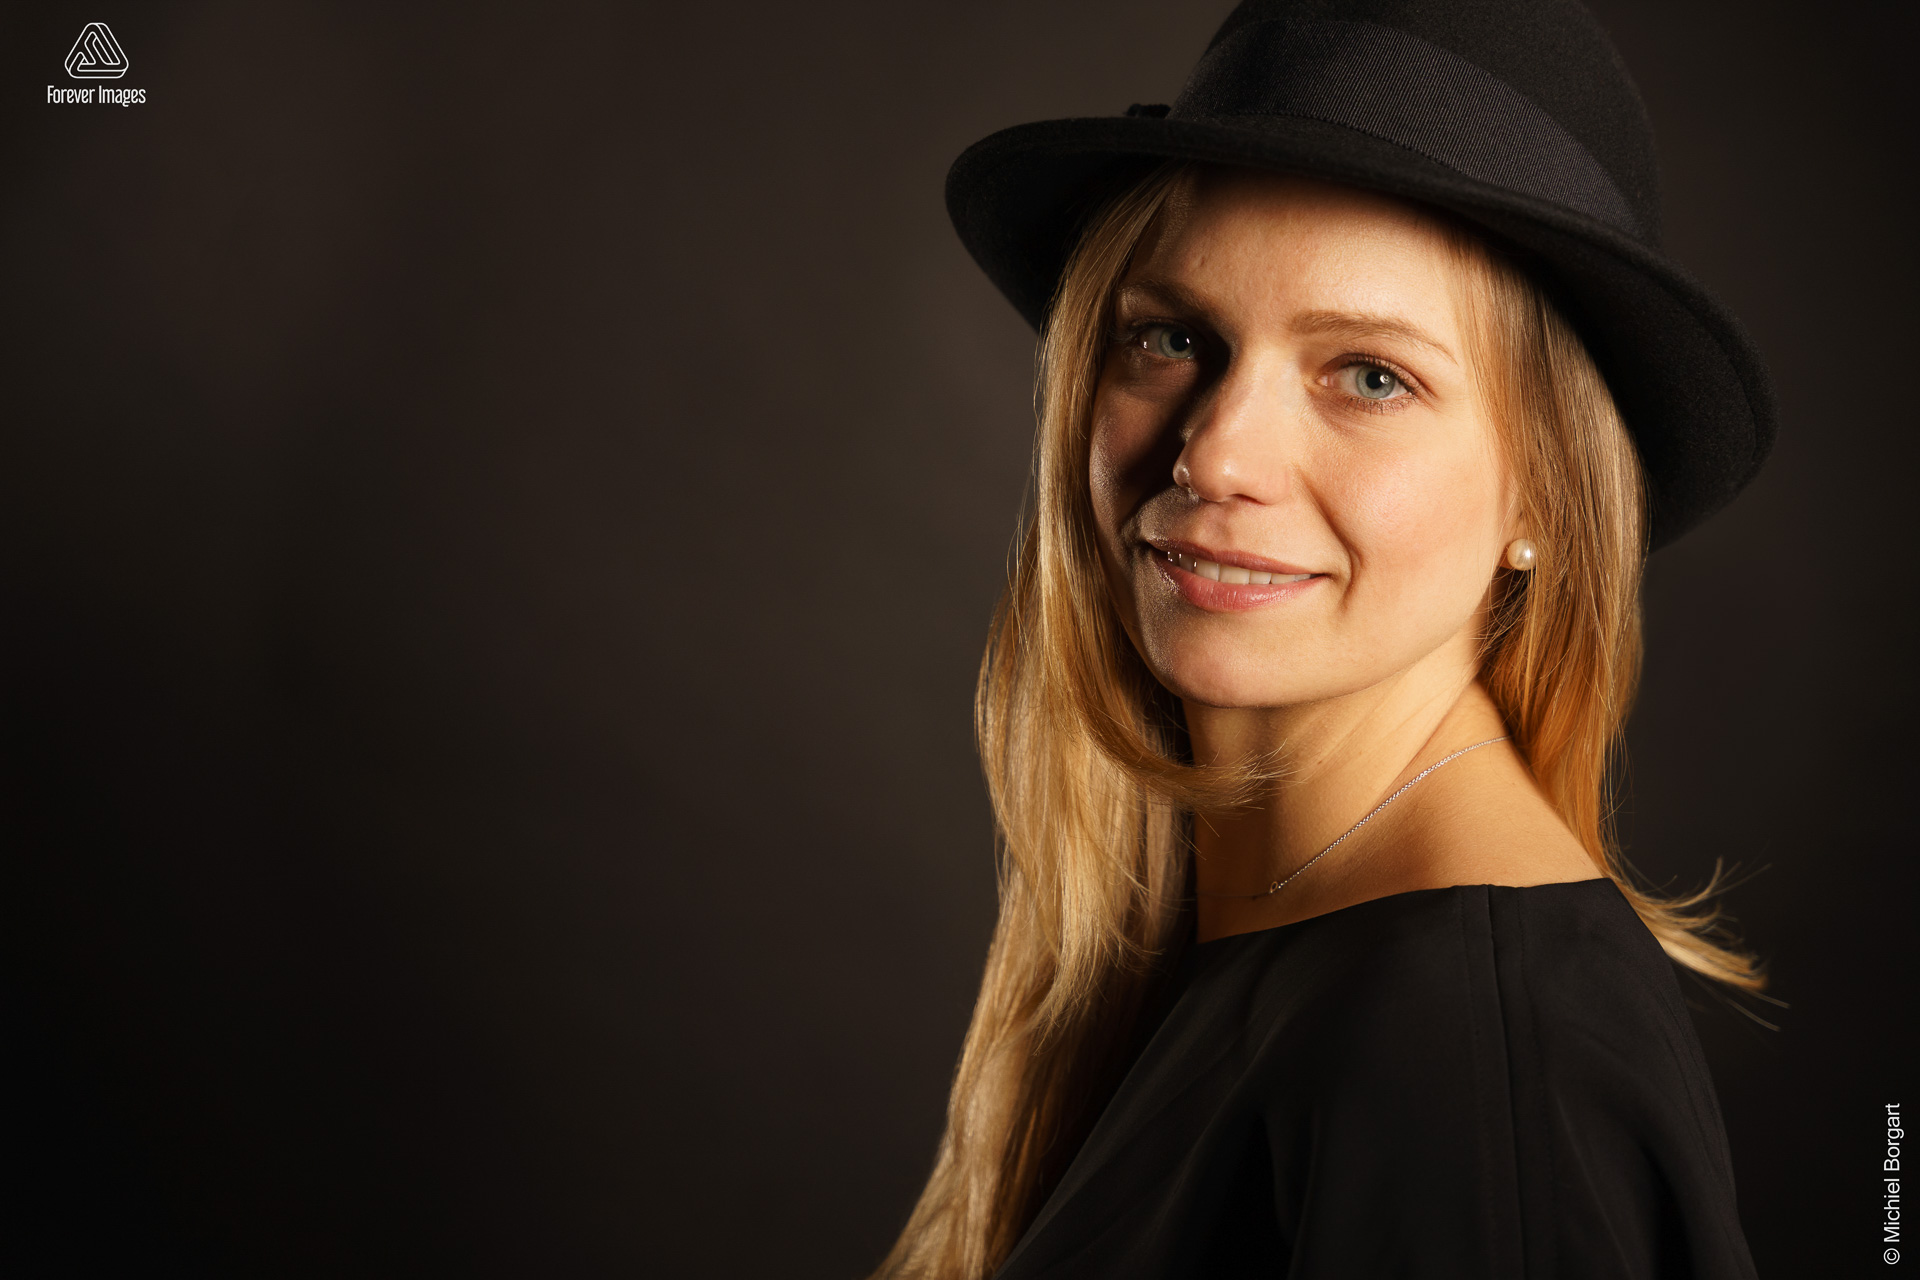 Portretfoto jonge dame blond haar zwart jurkje met zwarte hoed | Fanziska | Portretfotograaf Michiel Borgart - Forever Images.